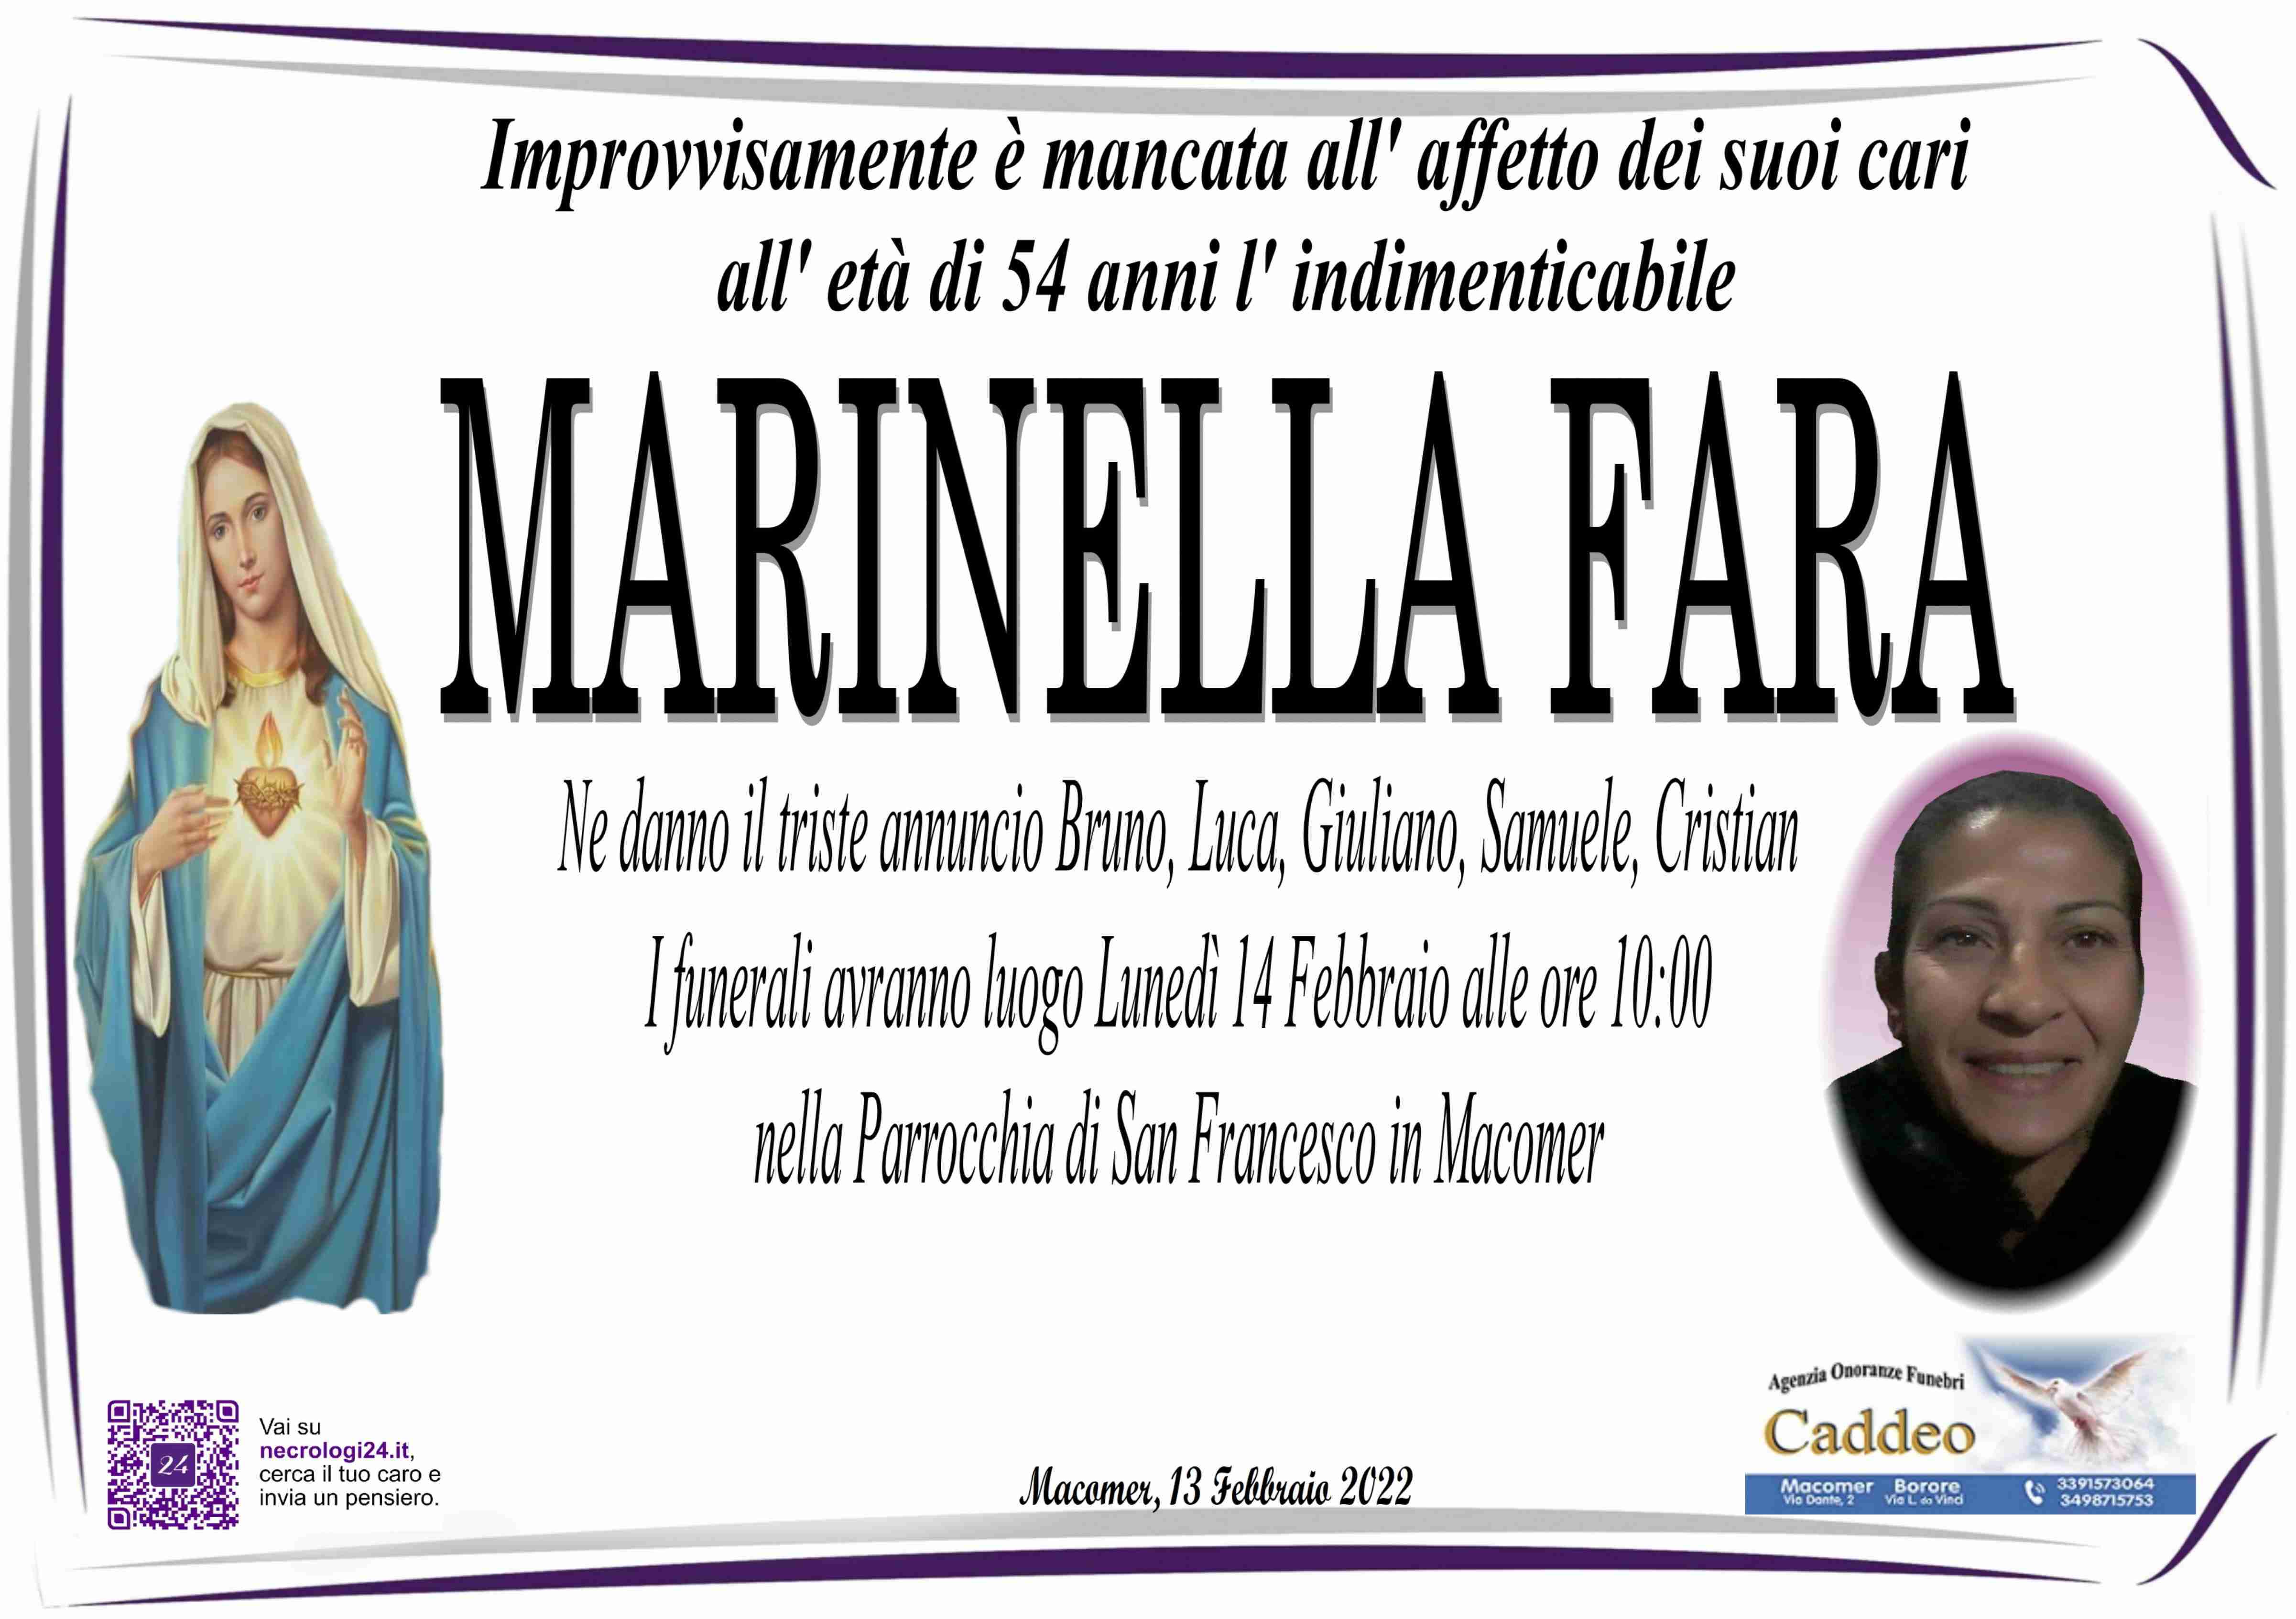 Marinella Fara